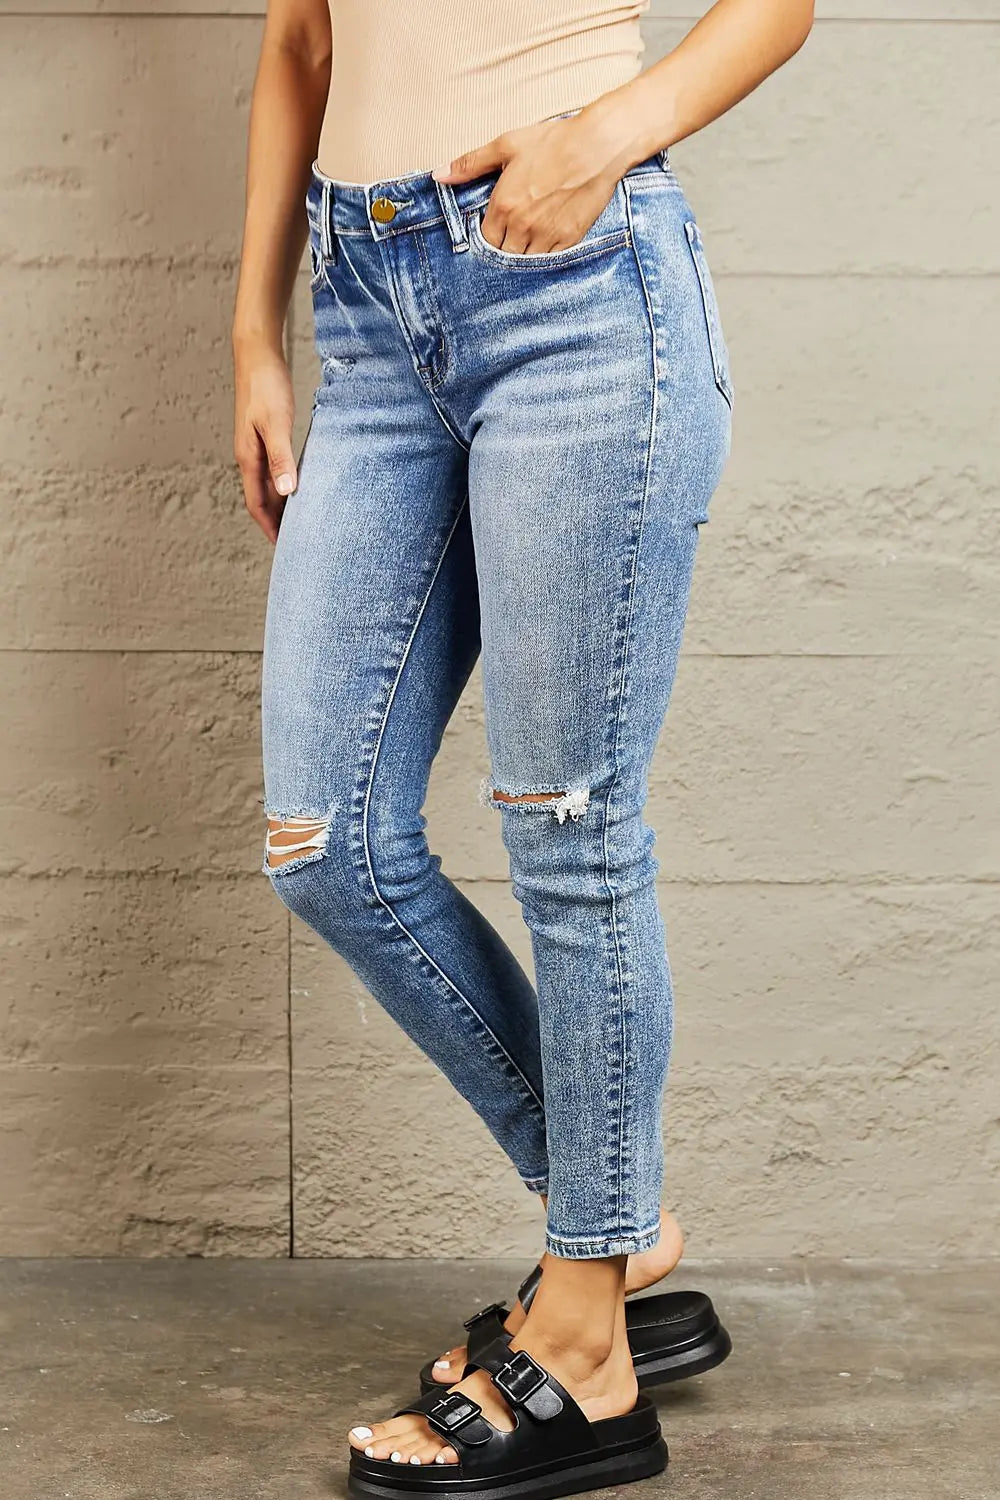 BAYEAS Mid Rise Distressed Skinny Jeans Trendsi